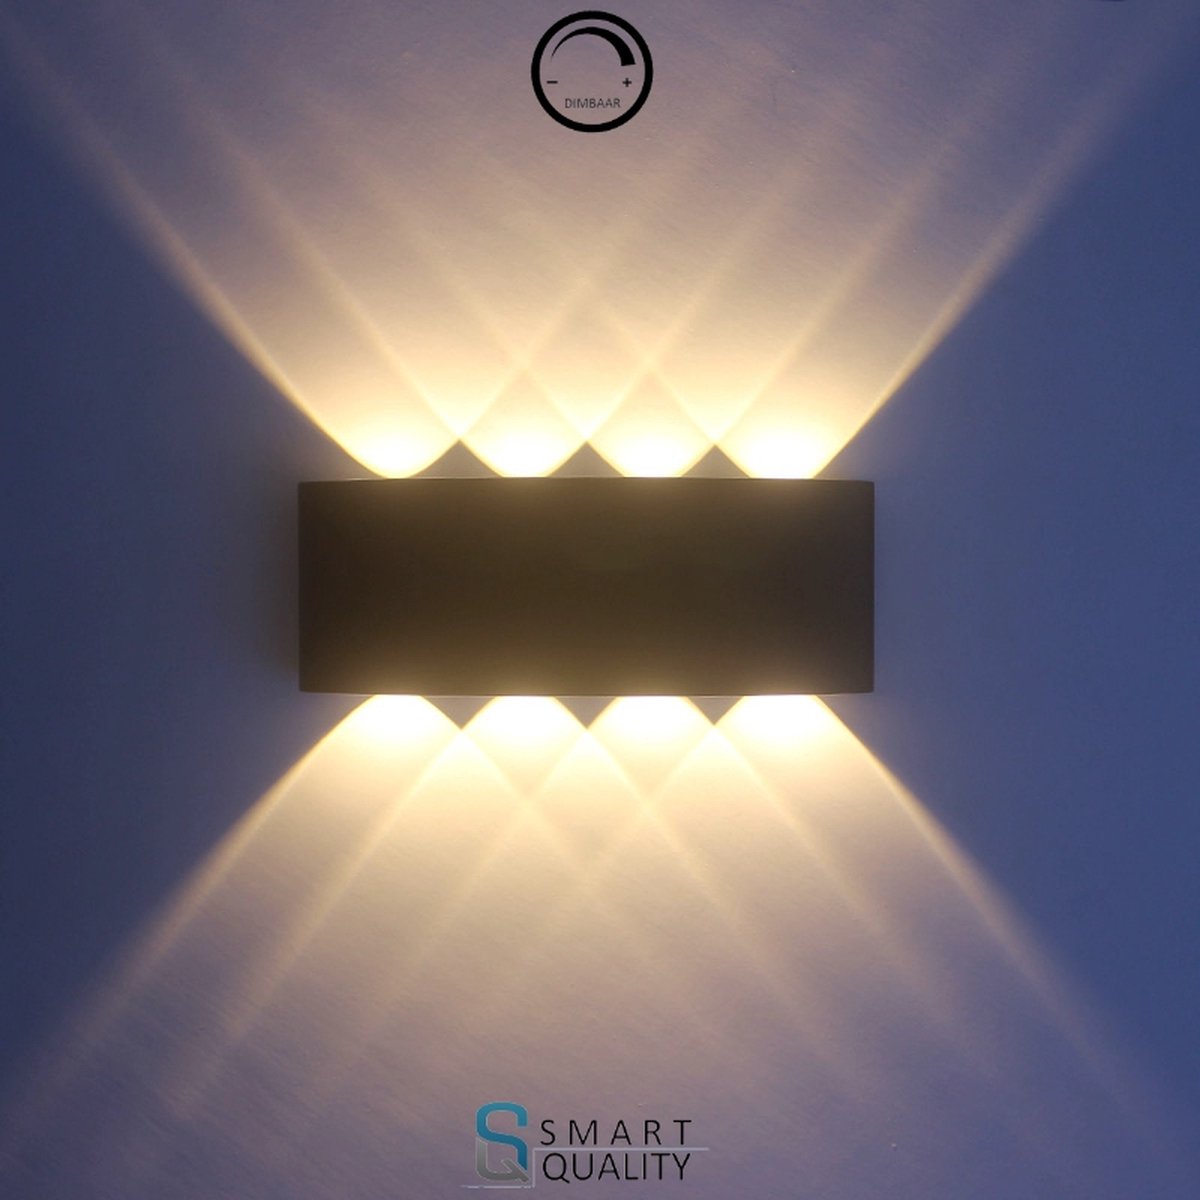 SMART QUALITY - Dimbare Led wandlamp binnen & buiten - IP65 - Mat zwart -Waterdicht - Badkamerverlichting - Spiegelverlichting - Tuin verlichting Dimbaar